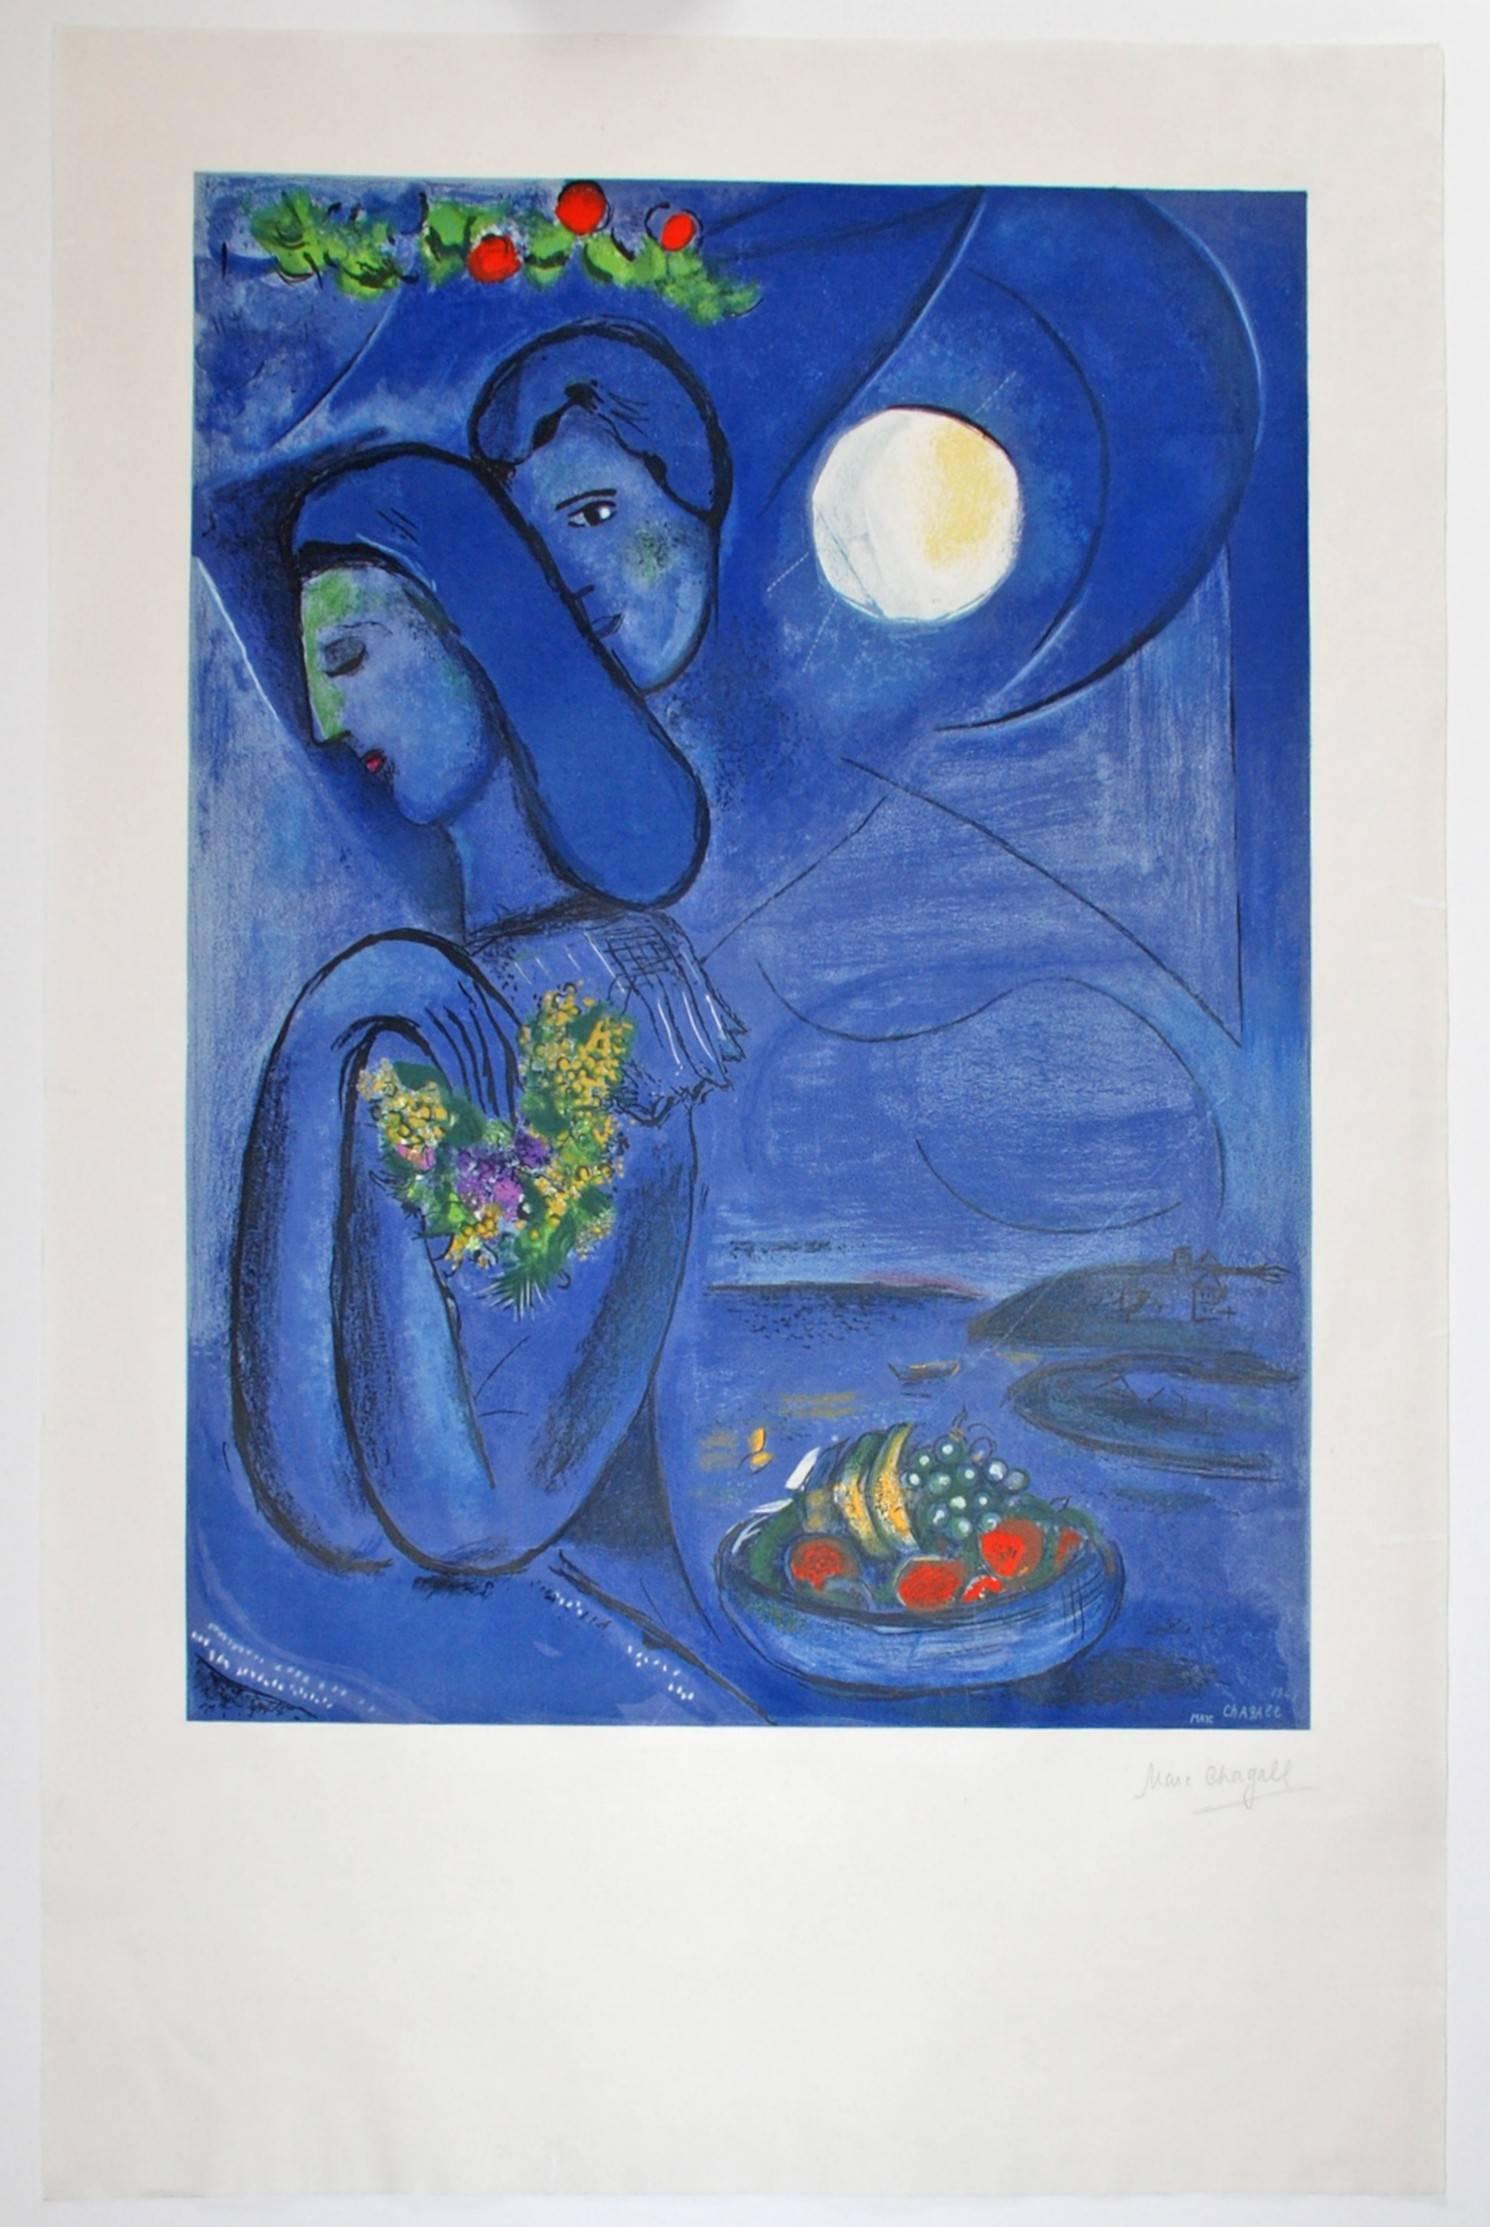 Saint Jean Cap-Ferrat - Print by (after) Marc Chagall